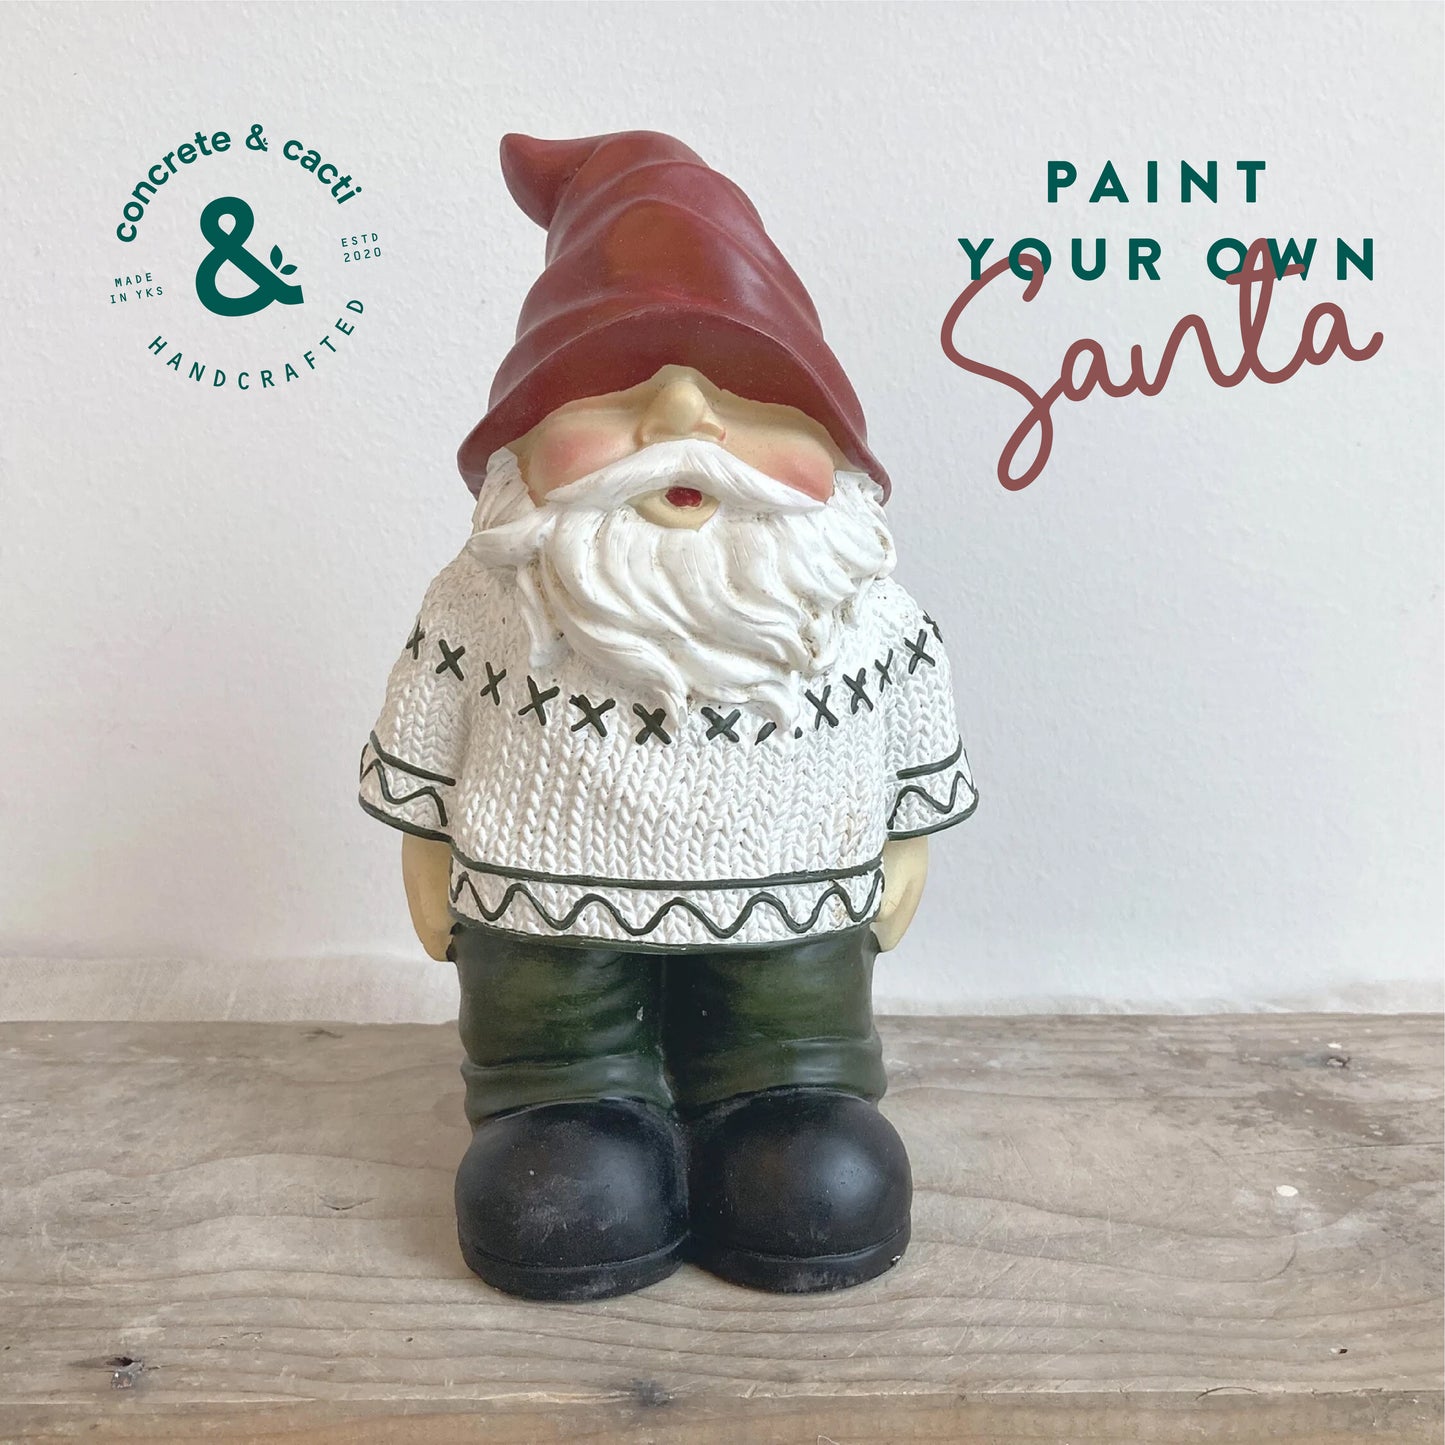 Paint Your Own Santa & Gonks!